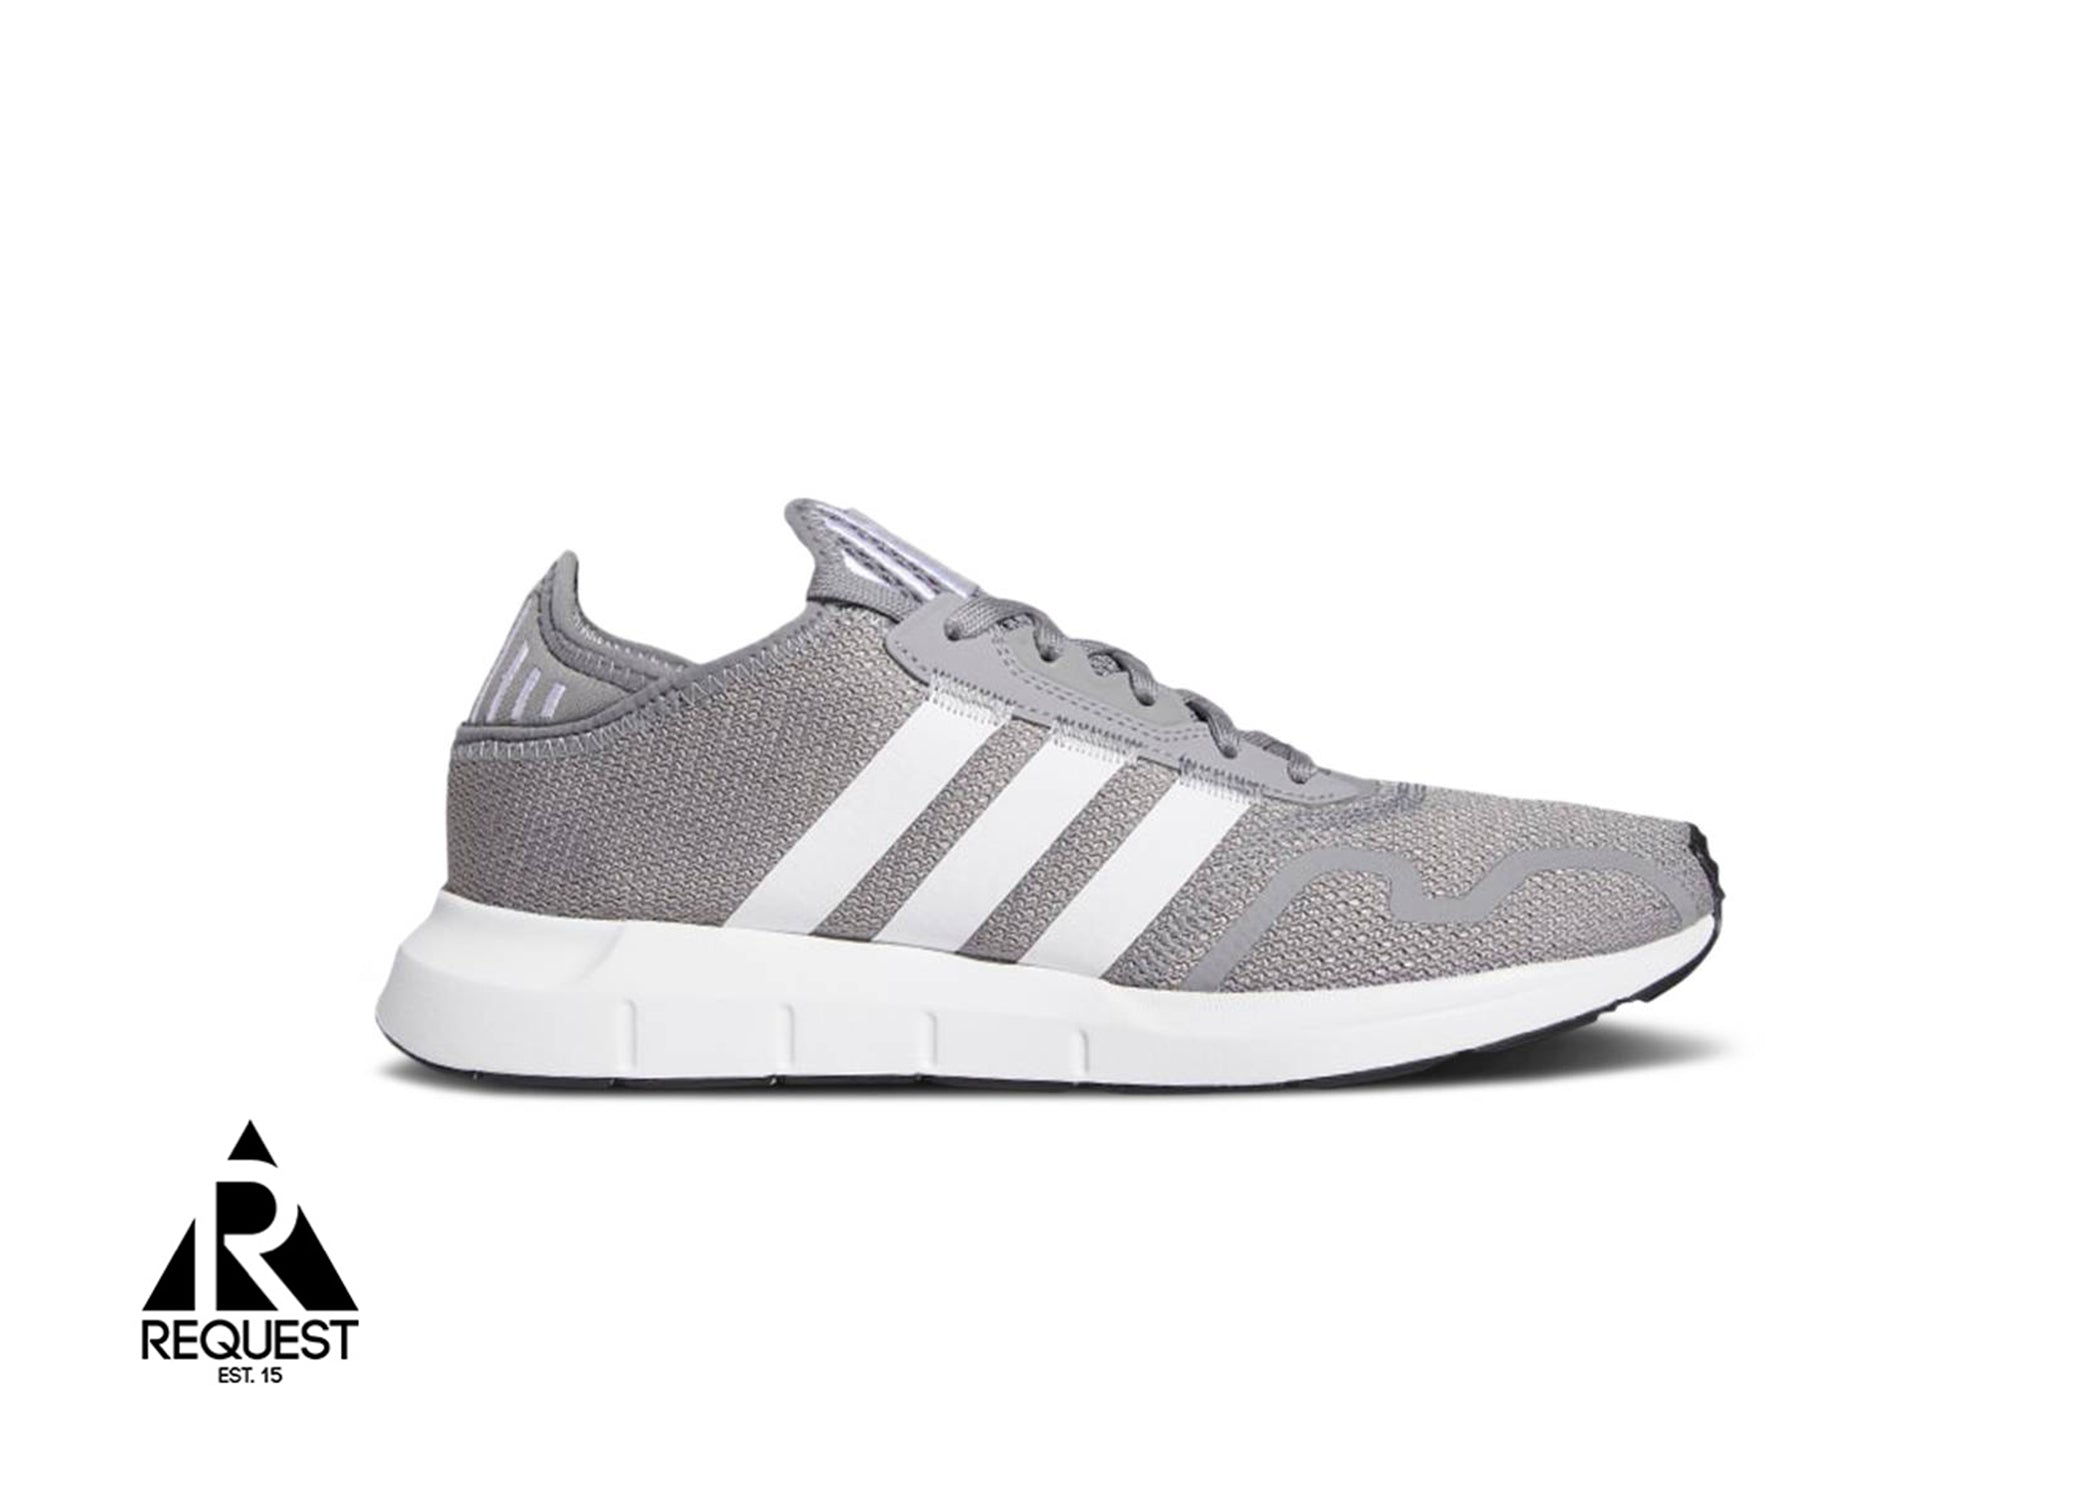 Adidas Swift Run X "Grey"